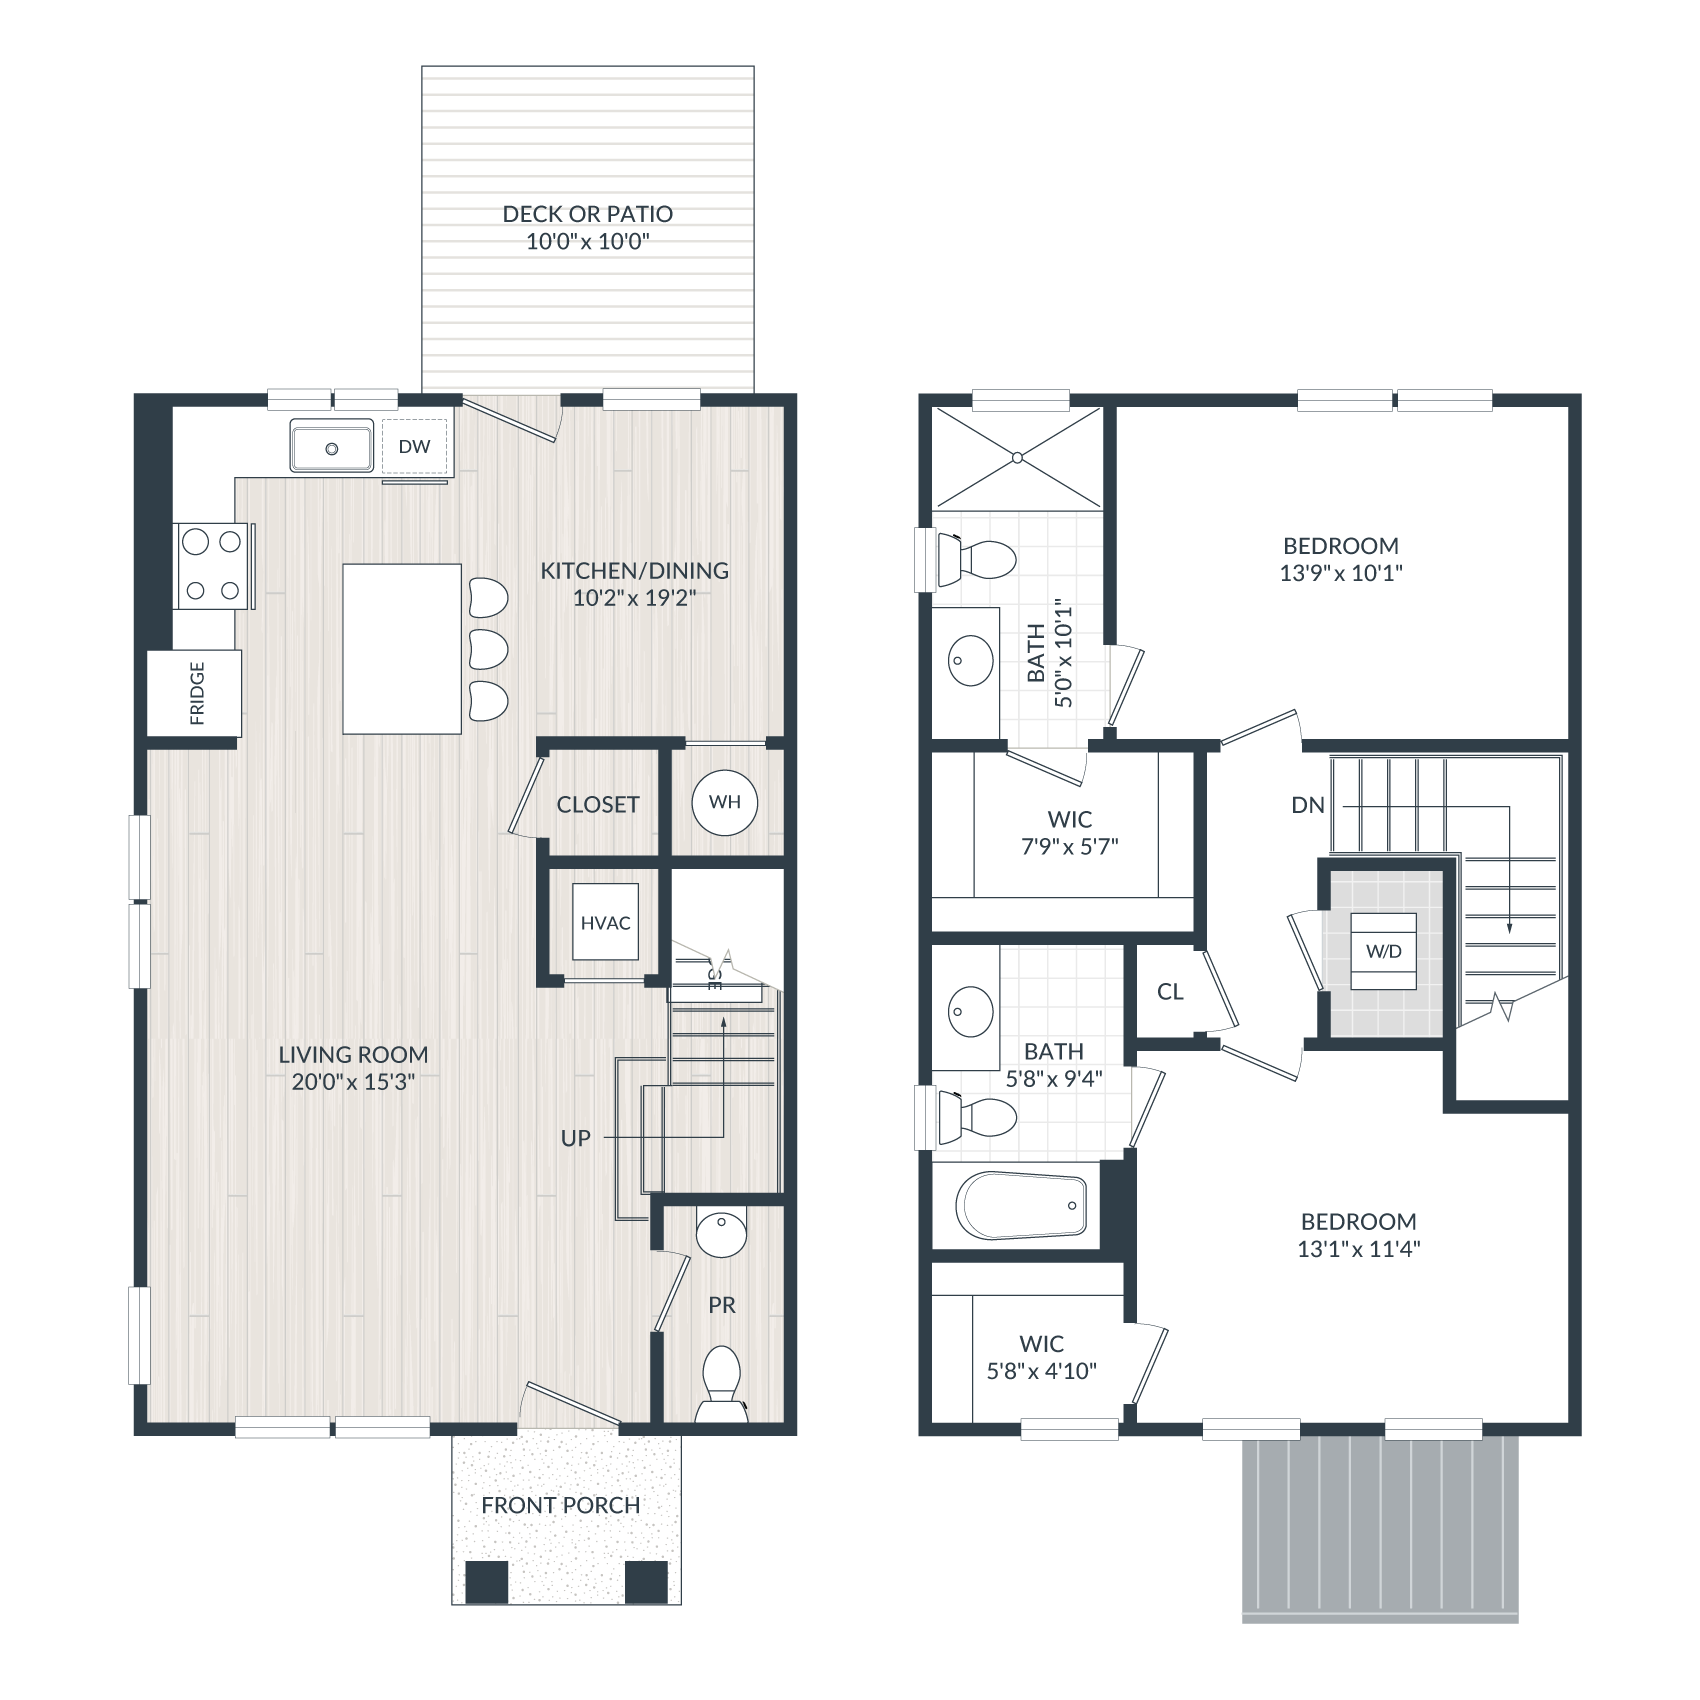 Apartment 311 floorplan